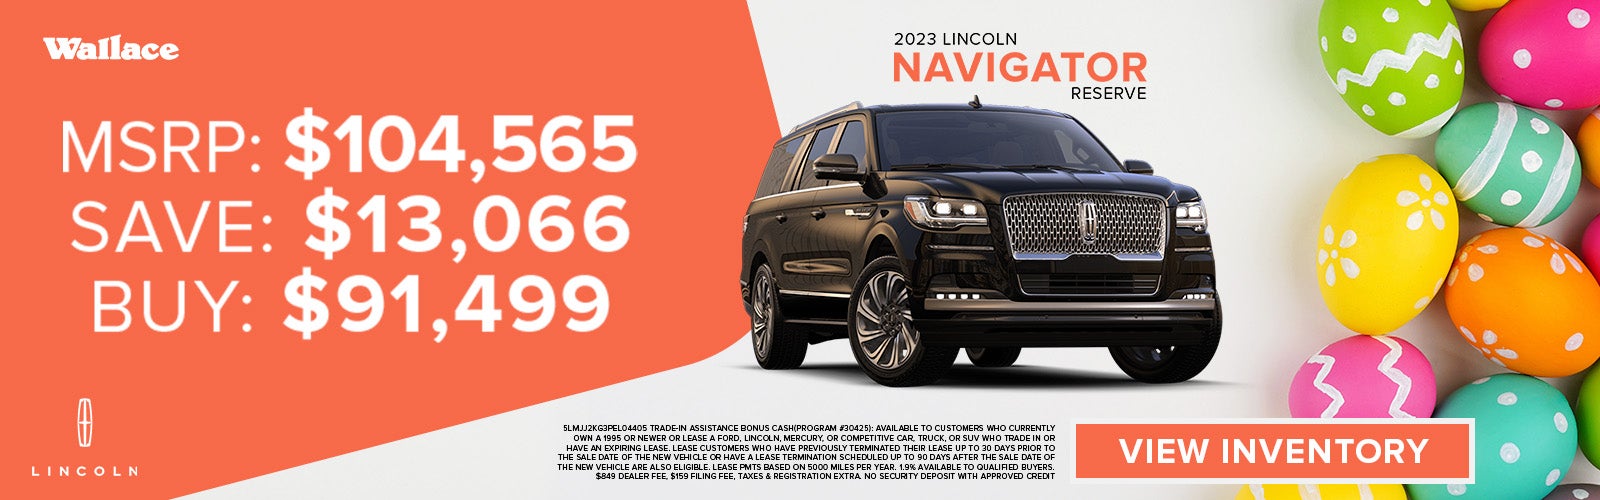 Lincoln Navigator Special Offer